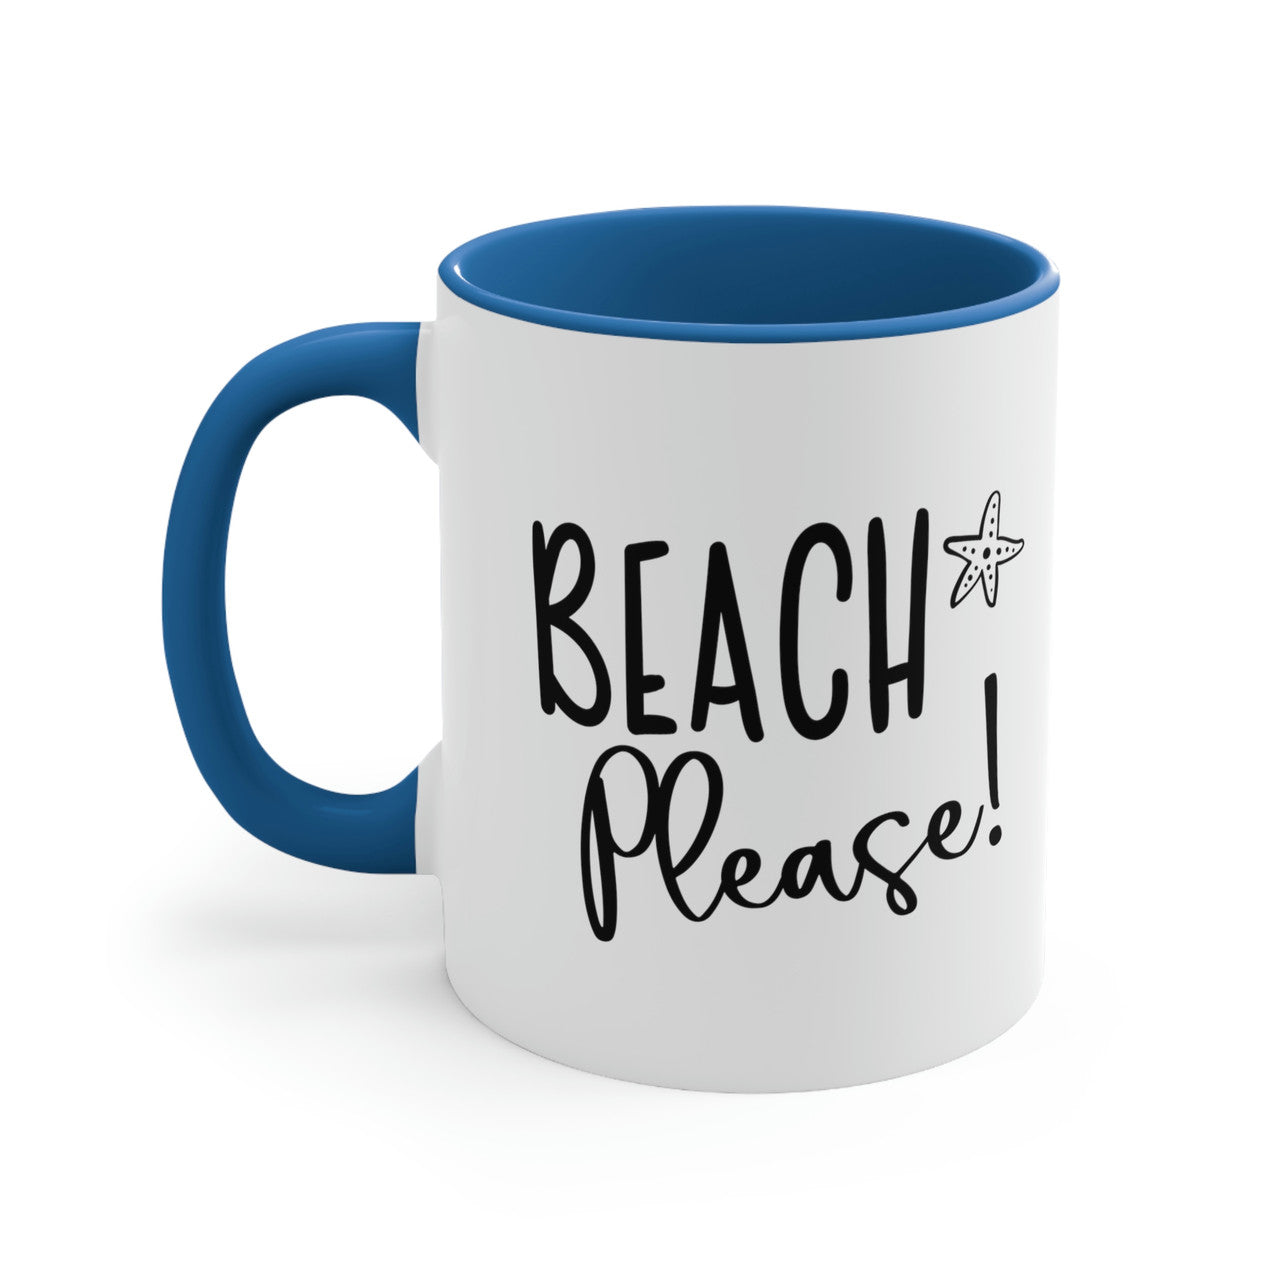 BEACH Please! Ceramic Beach Coffee Mug, 5 Colors Mugs New England Trading Co Light Blue  